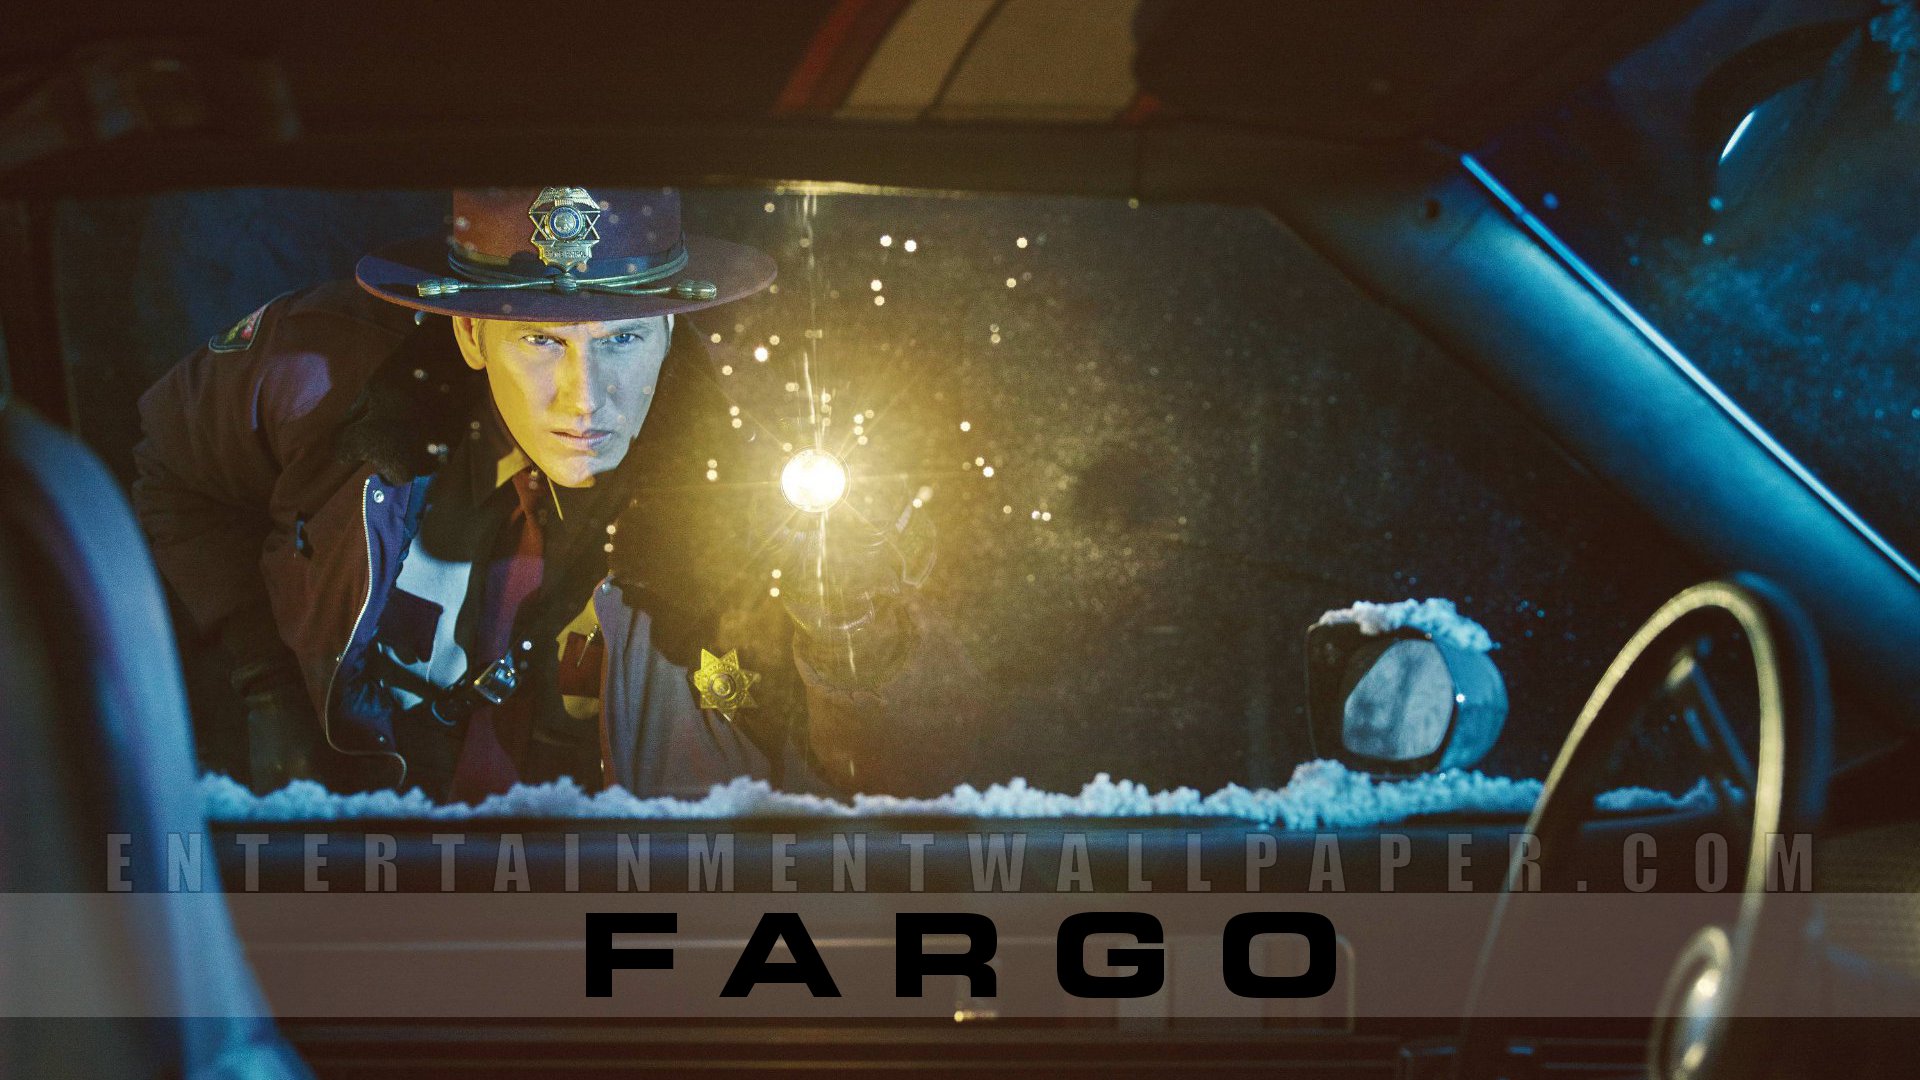 Original Size, Download Now - Fargo , HD Wallpaper & Backgrounds